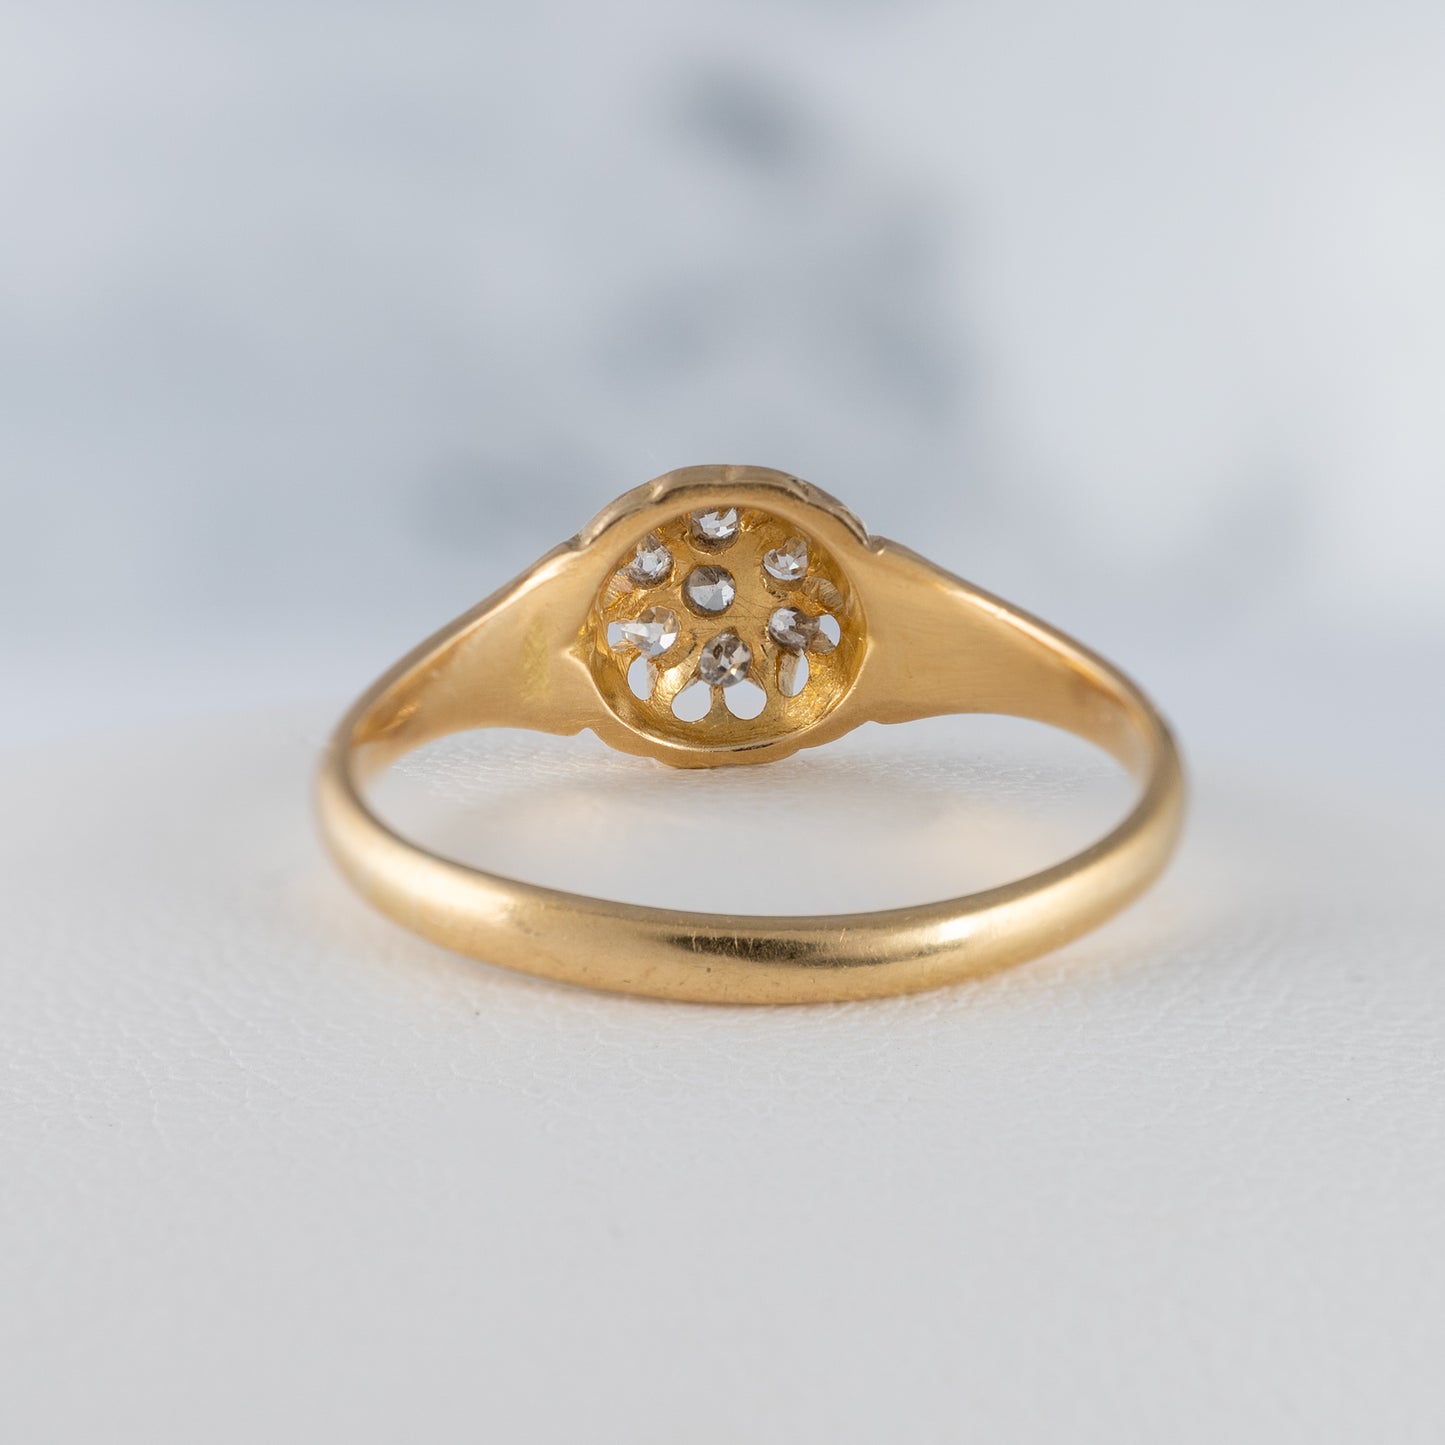 Antique 18ct Gold Diamond Cluster Ring